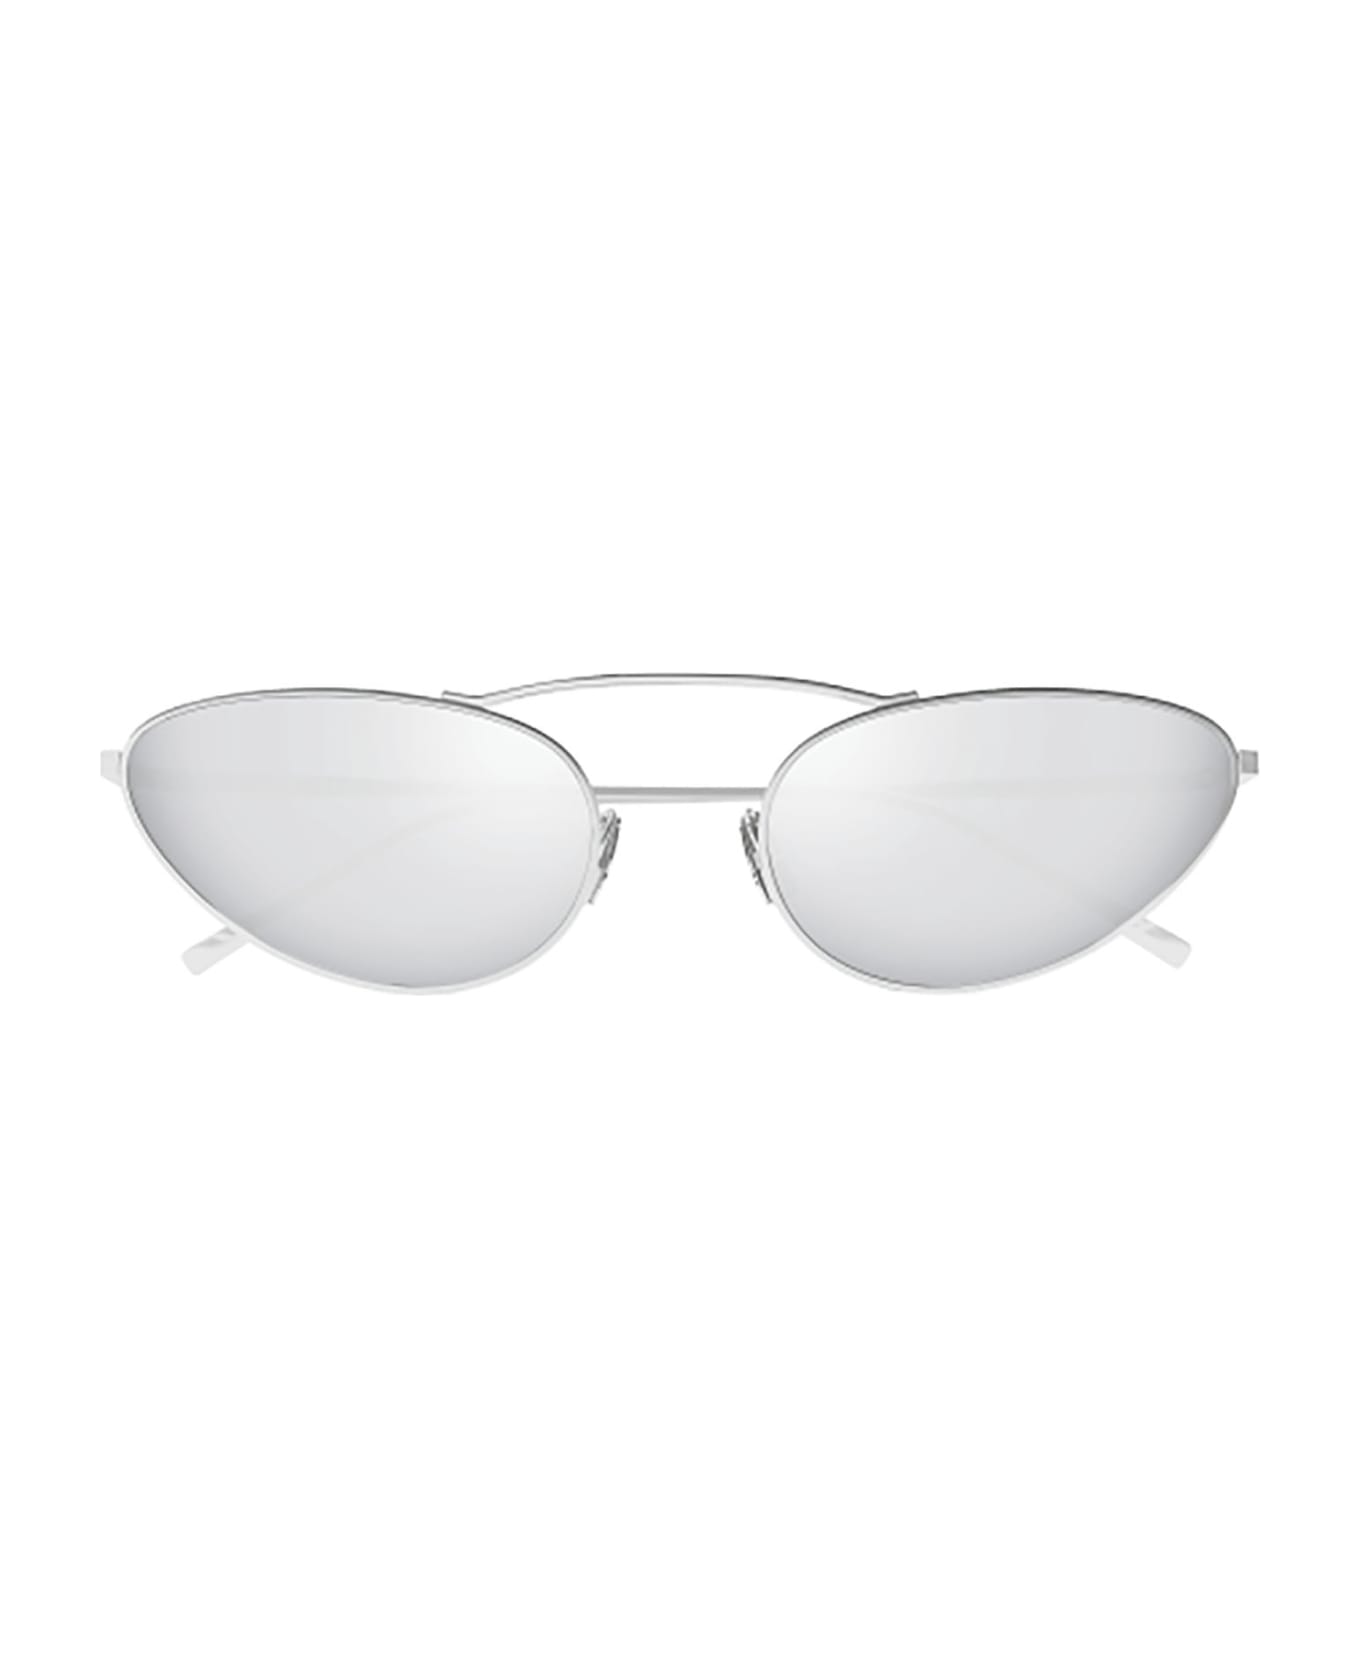 Saint Laurent Eyewear Sl 538 Sunglasses - 004 silver silver silver